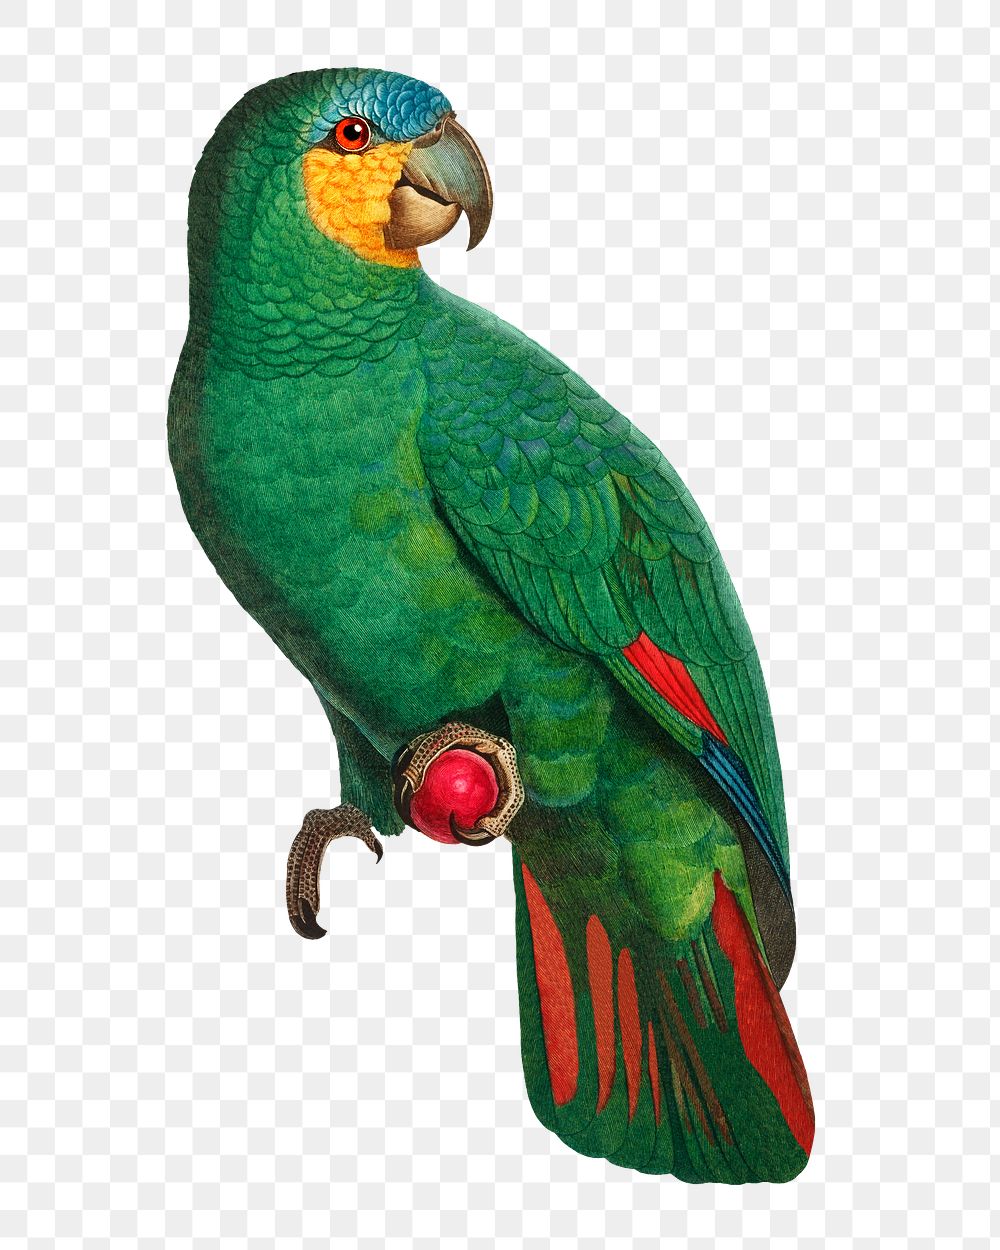 Orange-winged Amazon parrot png bird sticker, vintage animal illustration, transparent background